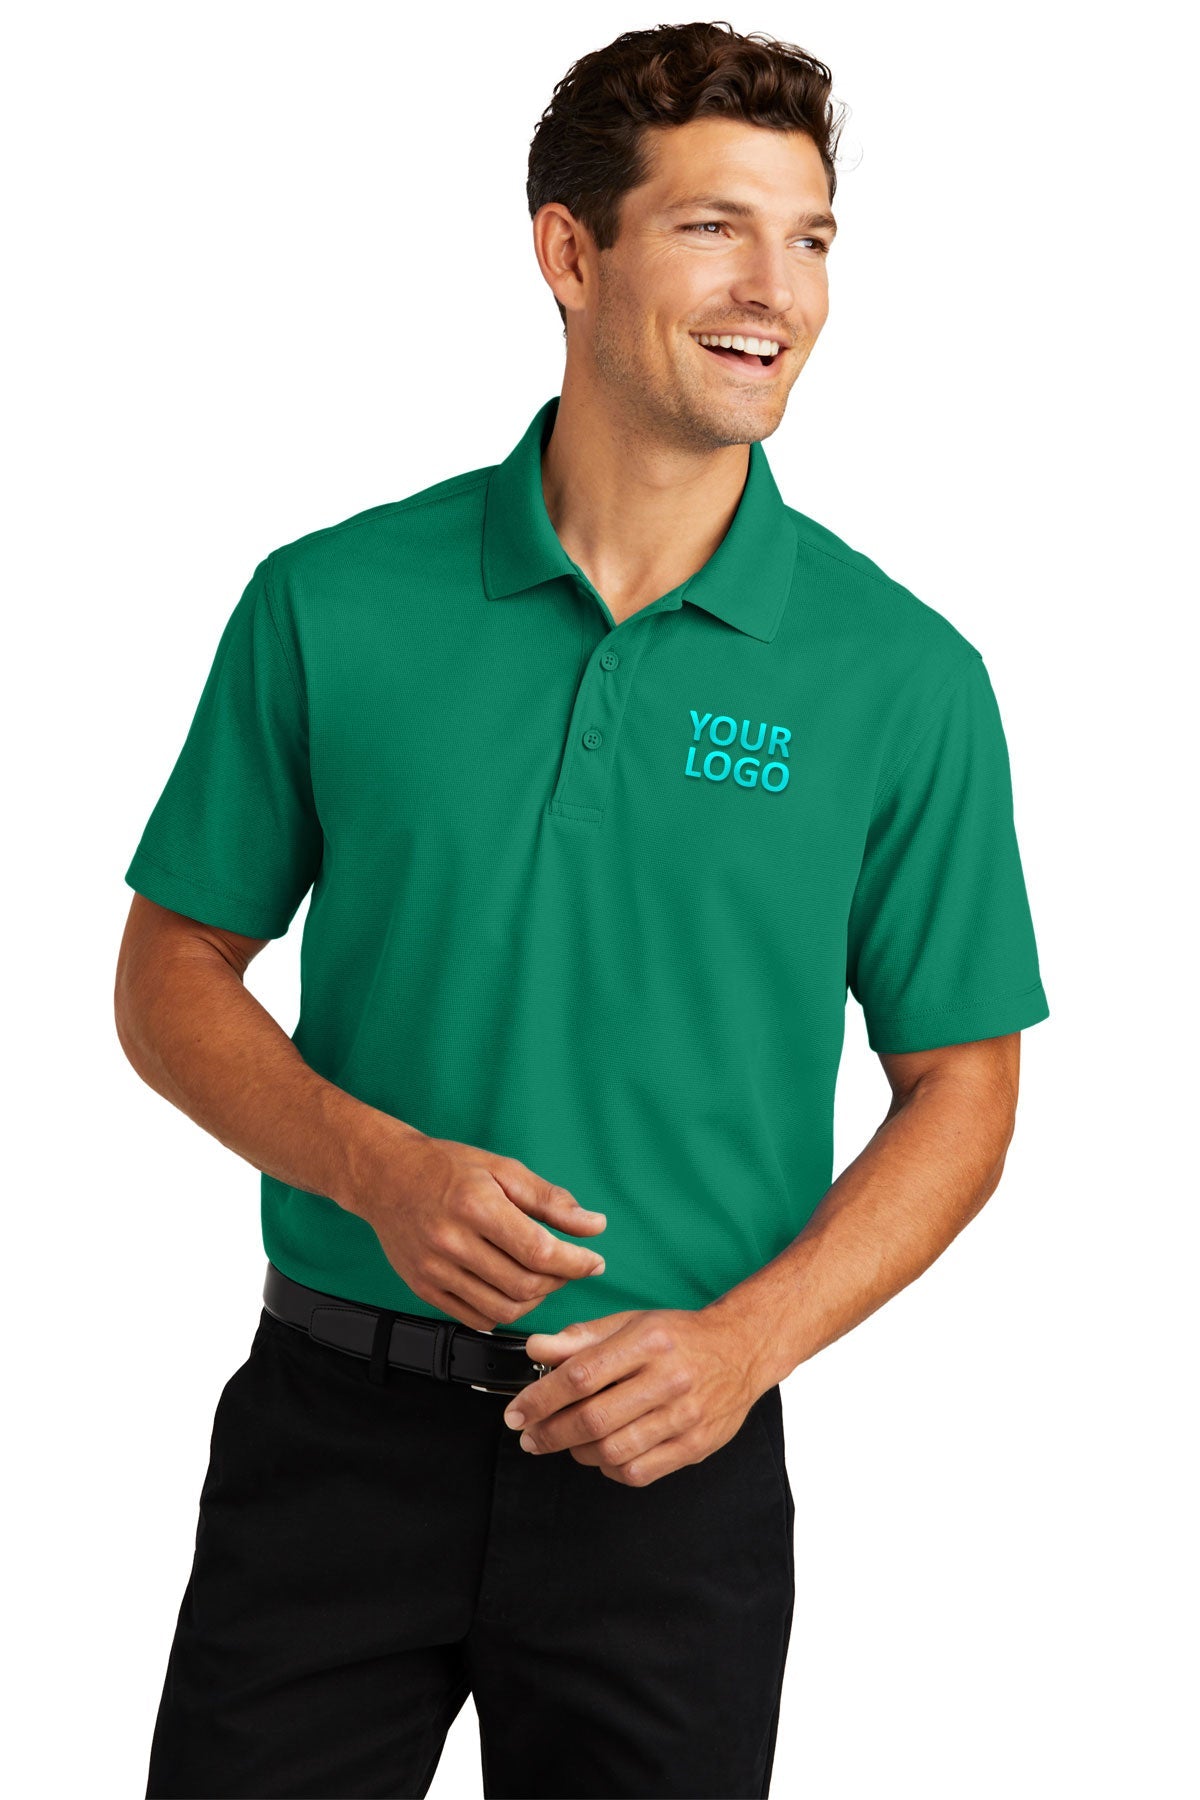 port authority jewel green k572 custom made polo shirts with logo